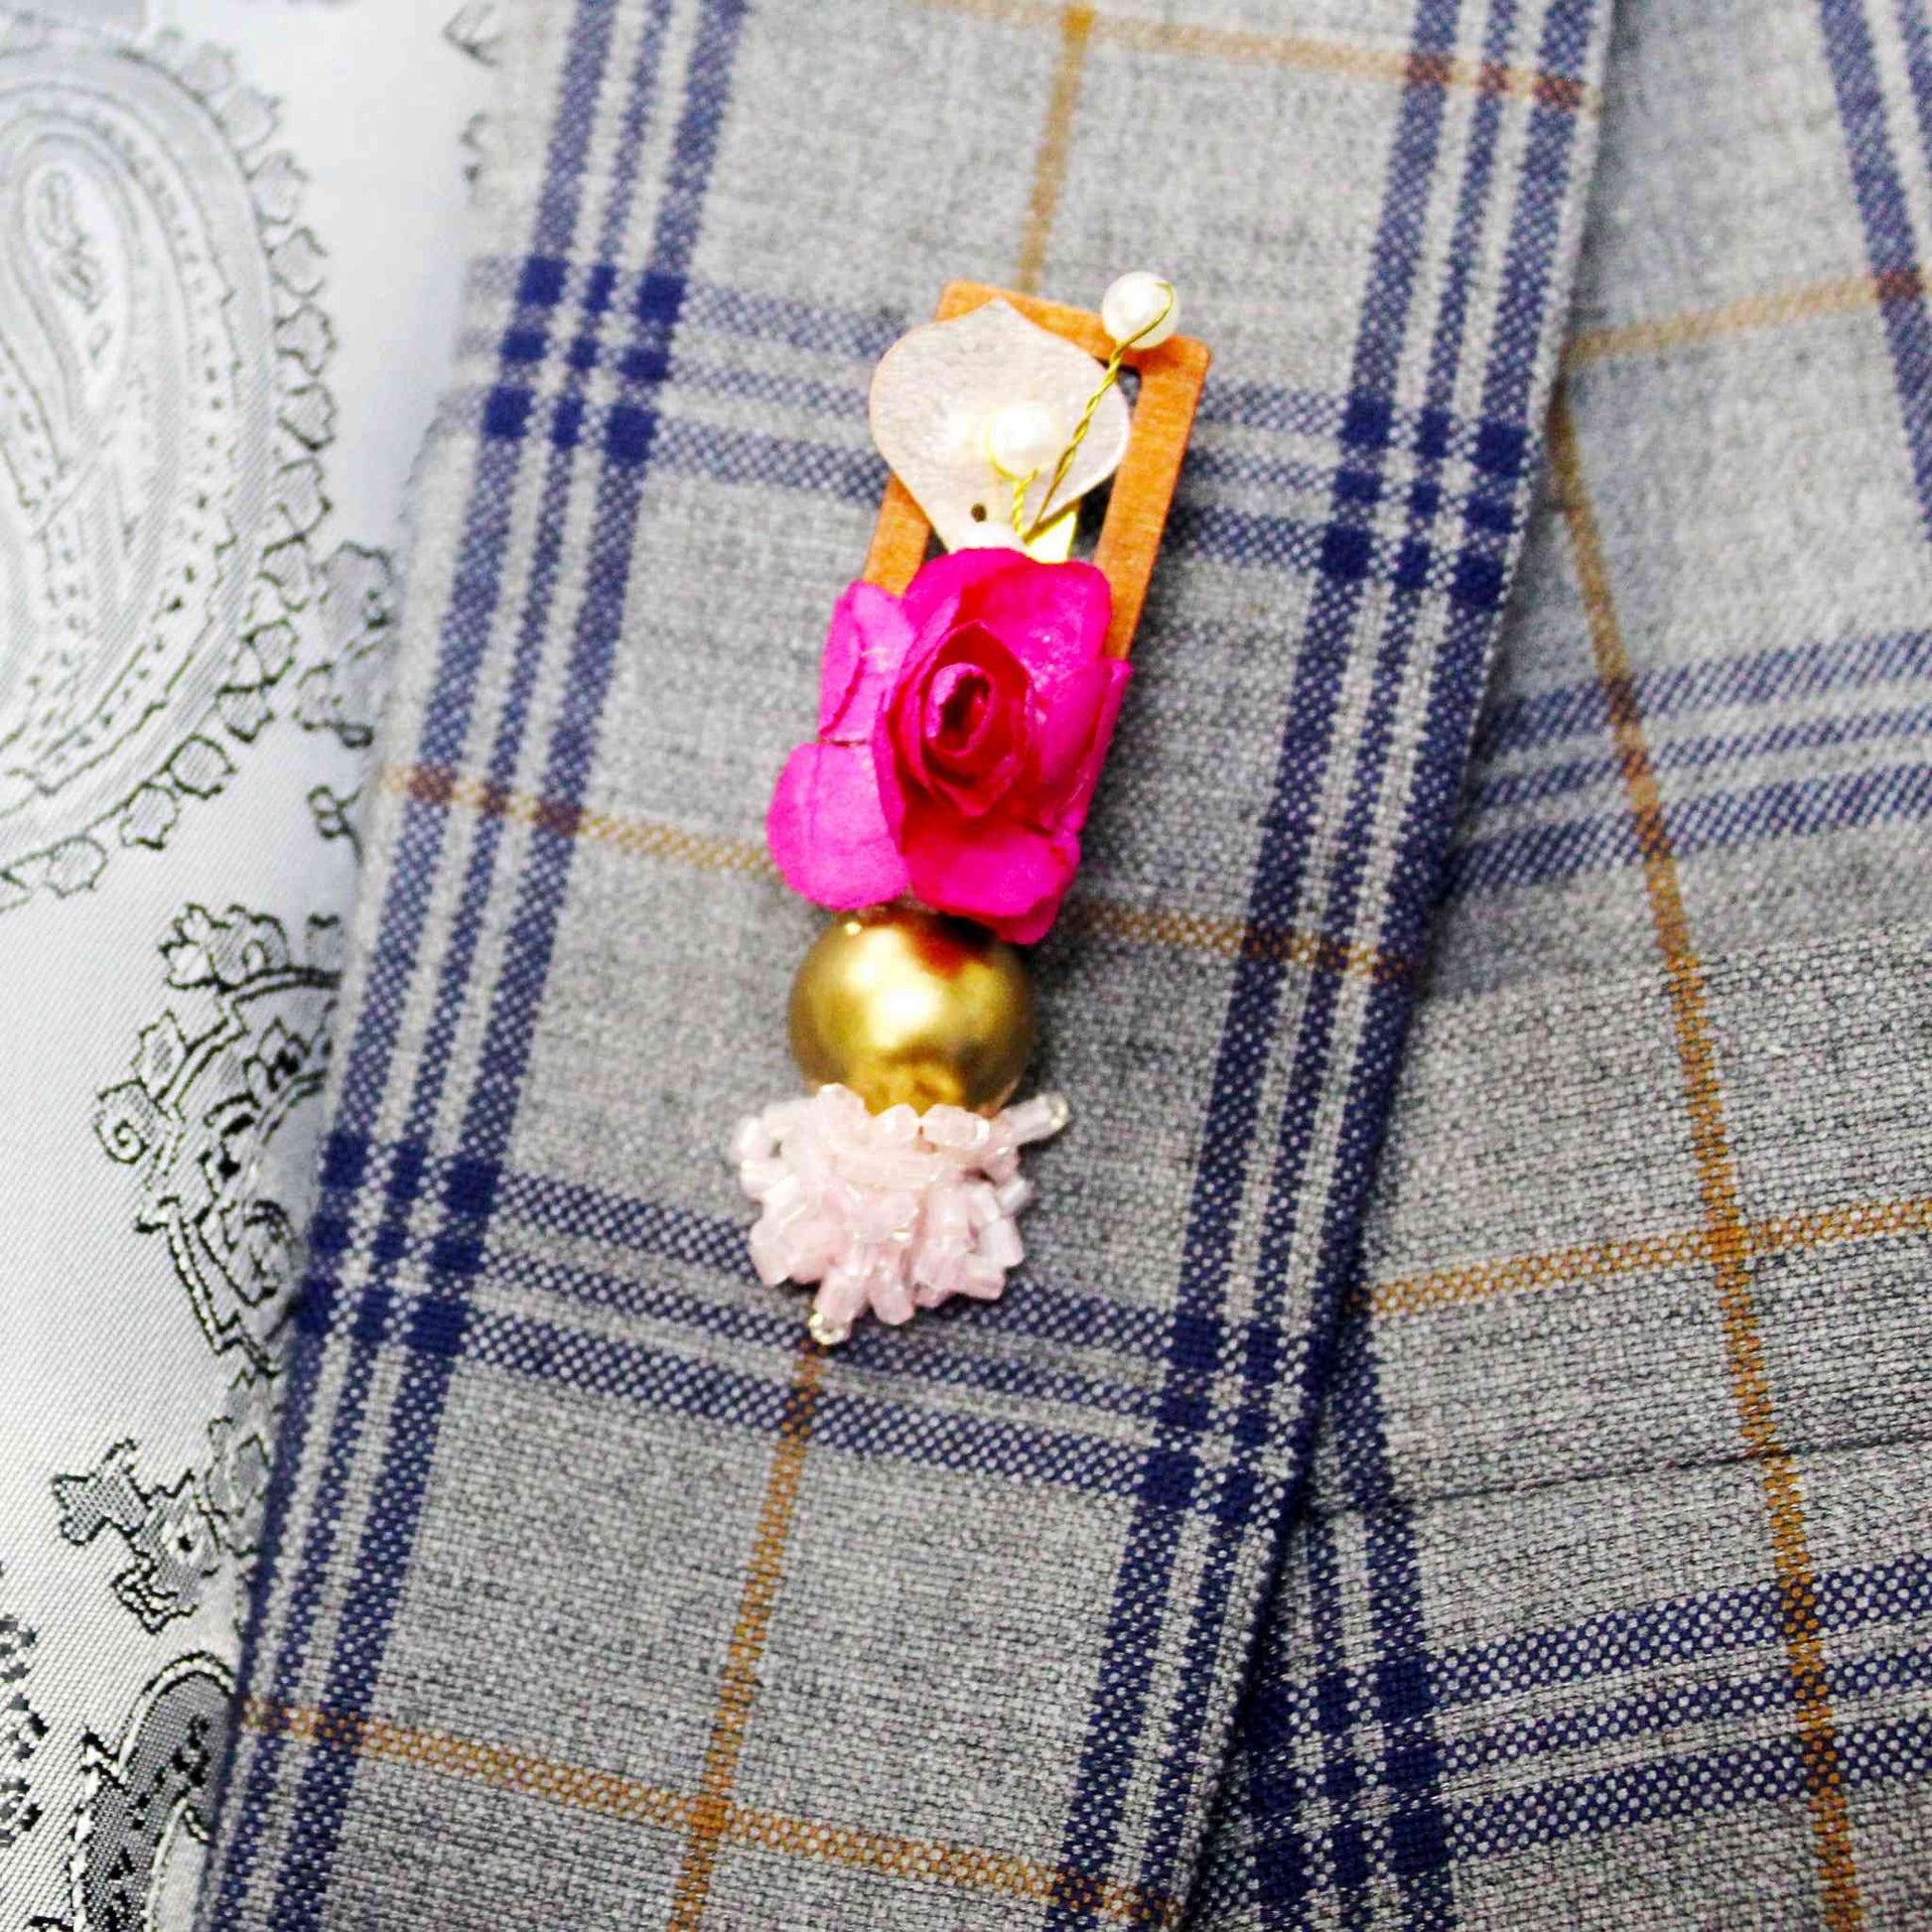 Indian Petals Handmade Paper Floral Elegant Brooch Lapel Pin for Boys Men, Welcome Gift - Indian Petals